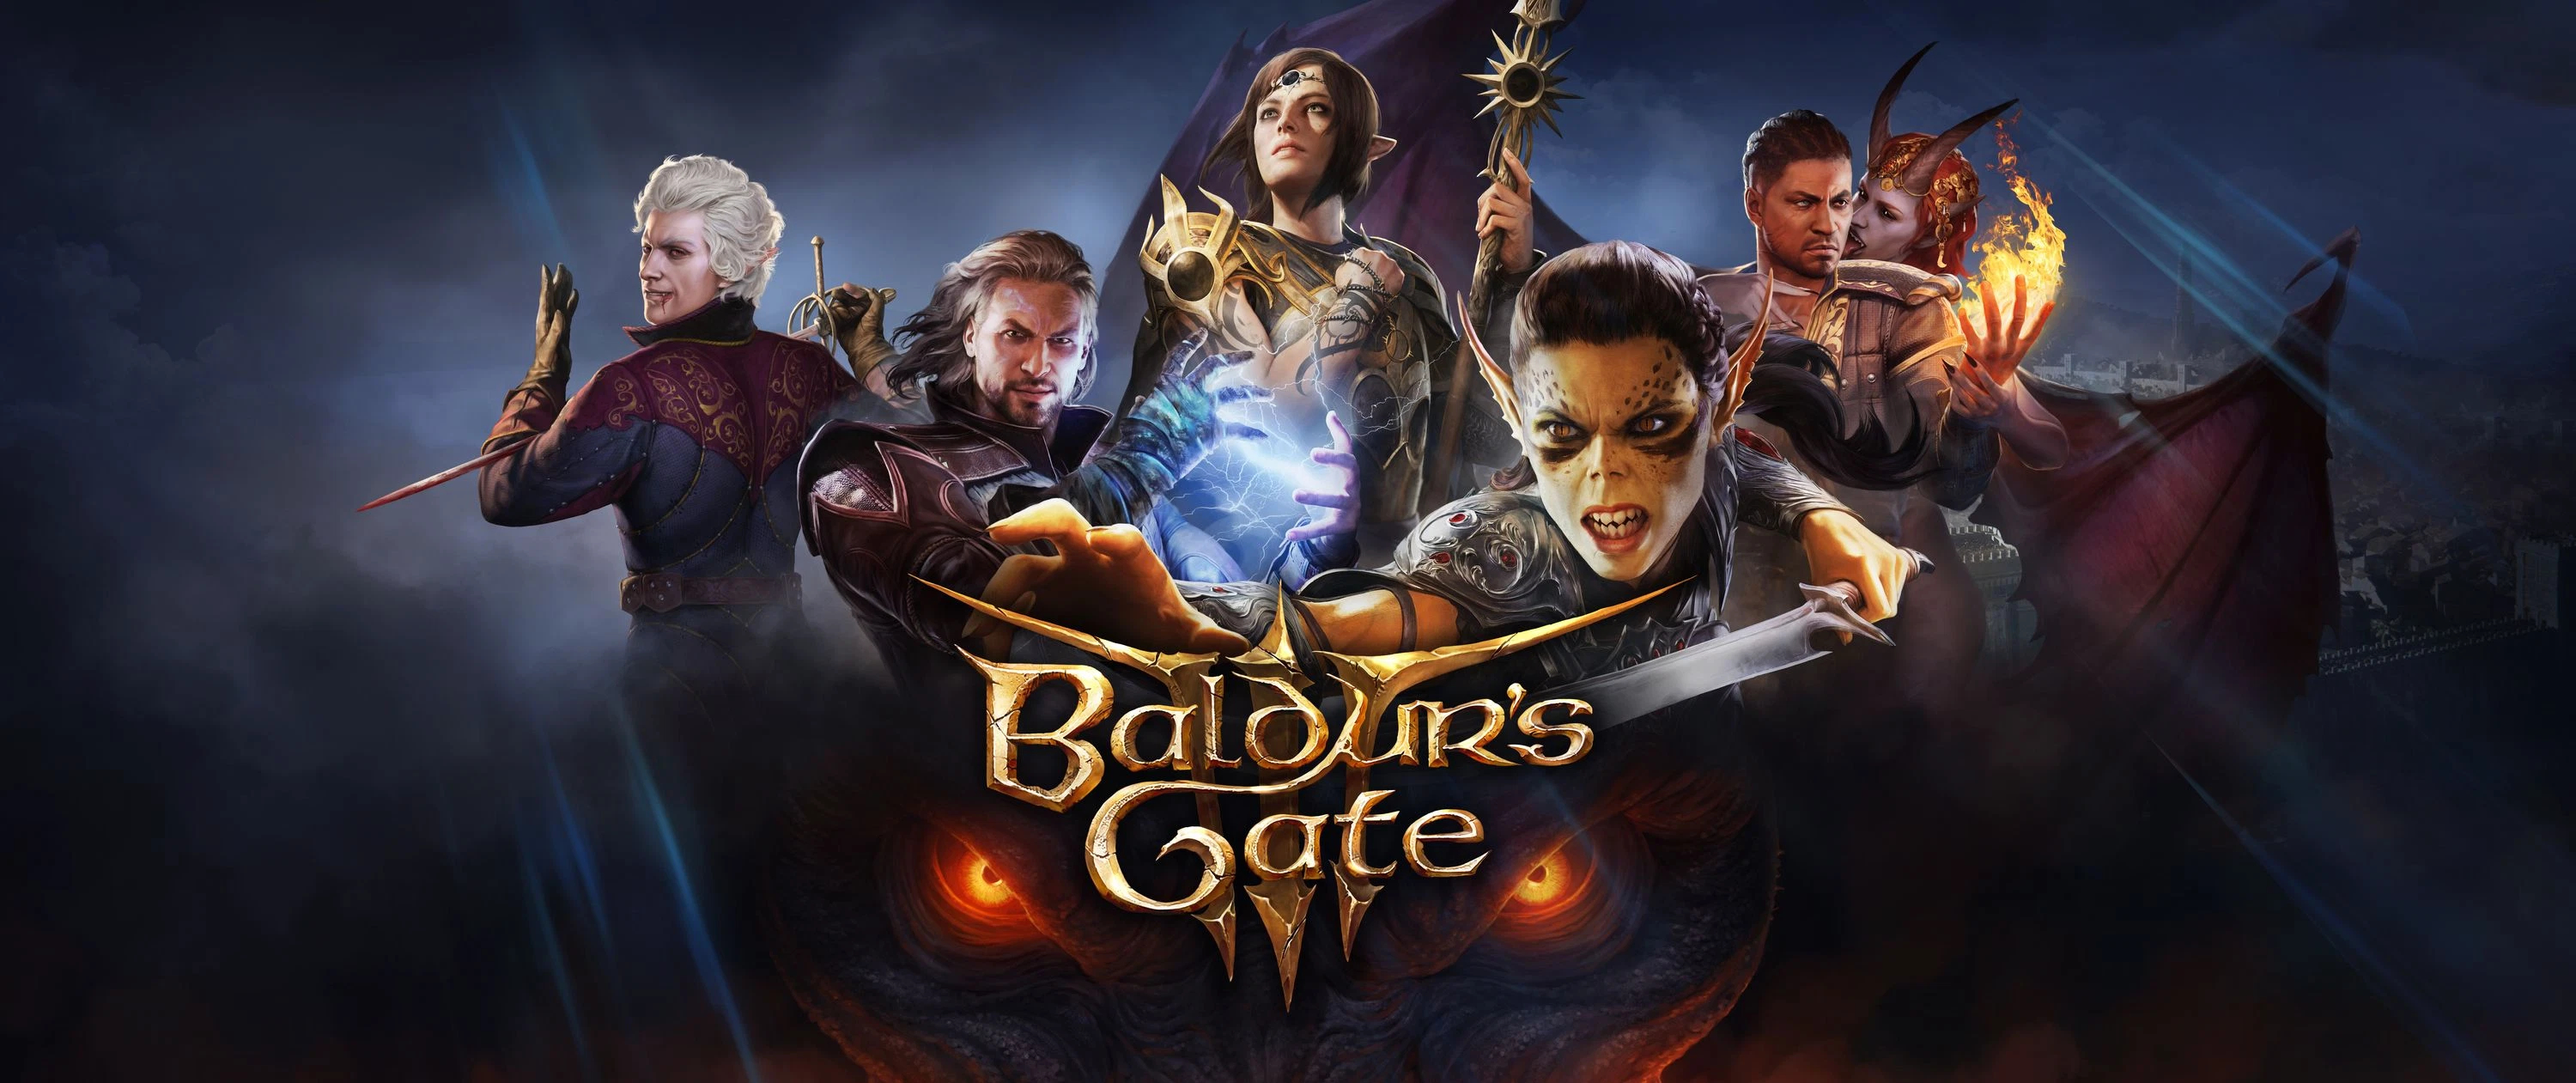 Baldur's Gate 3 Picture